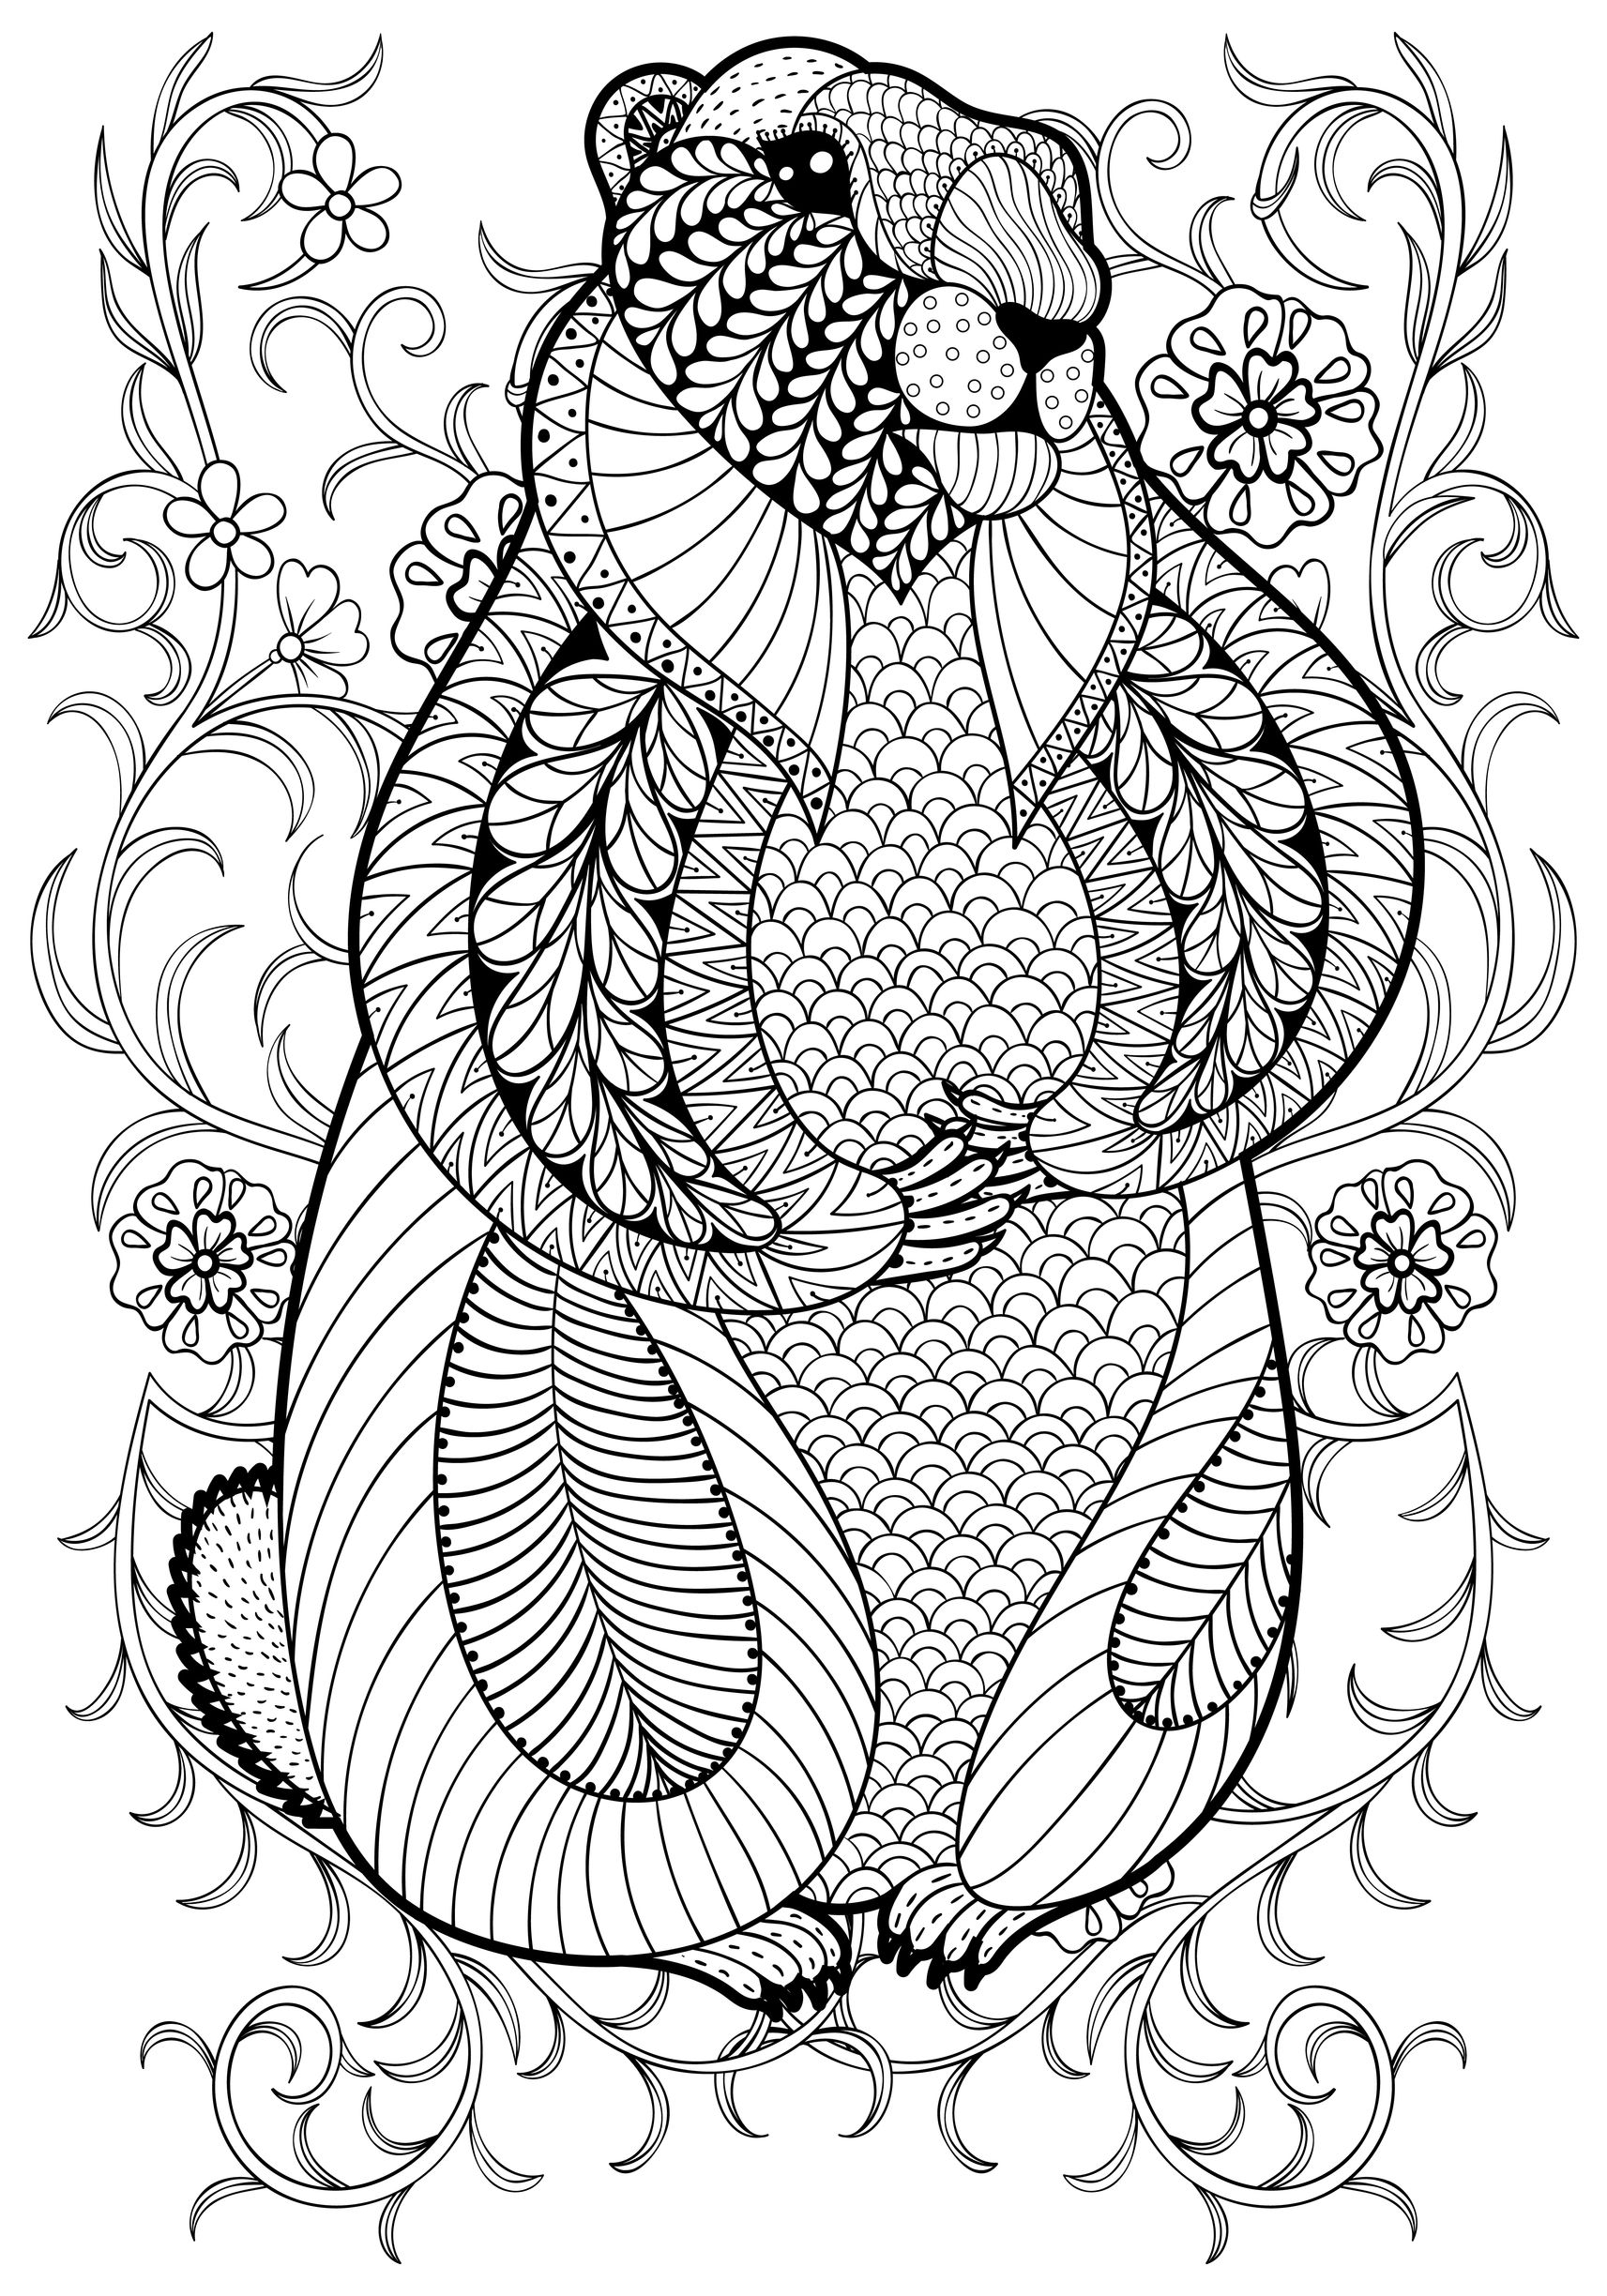 Jolie Marmotte, avec motifs abstraits, Artiste : Ipanki   Source : 123rf